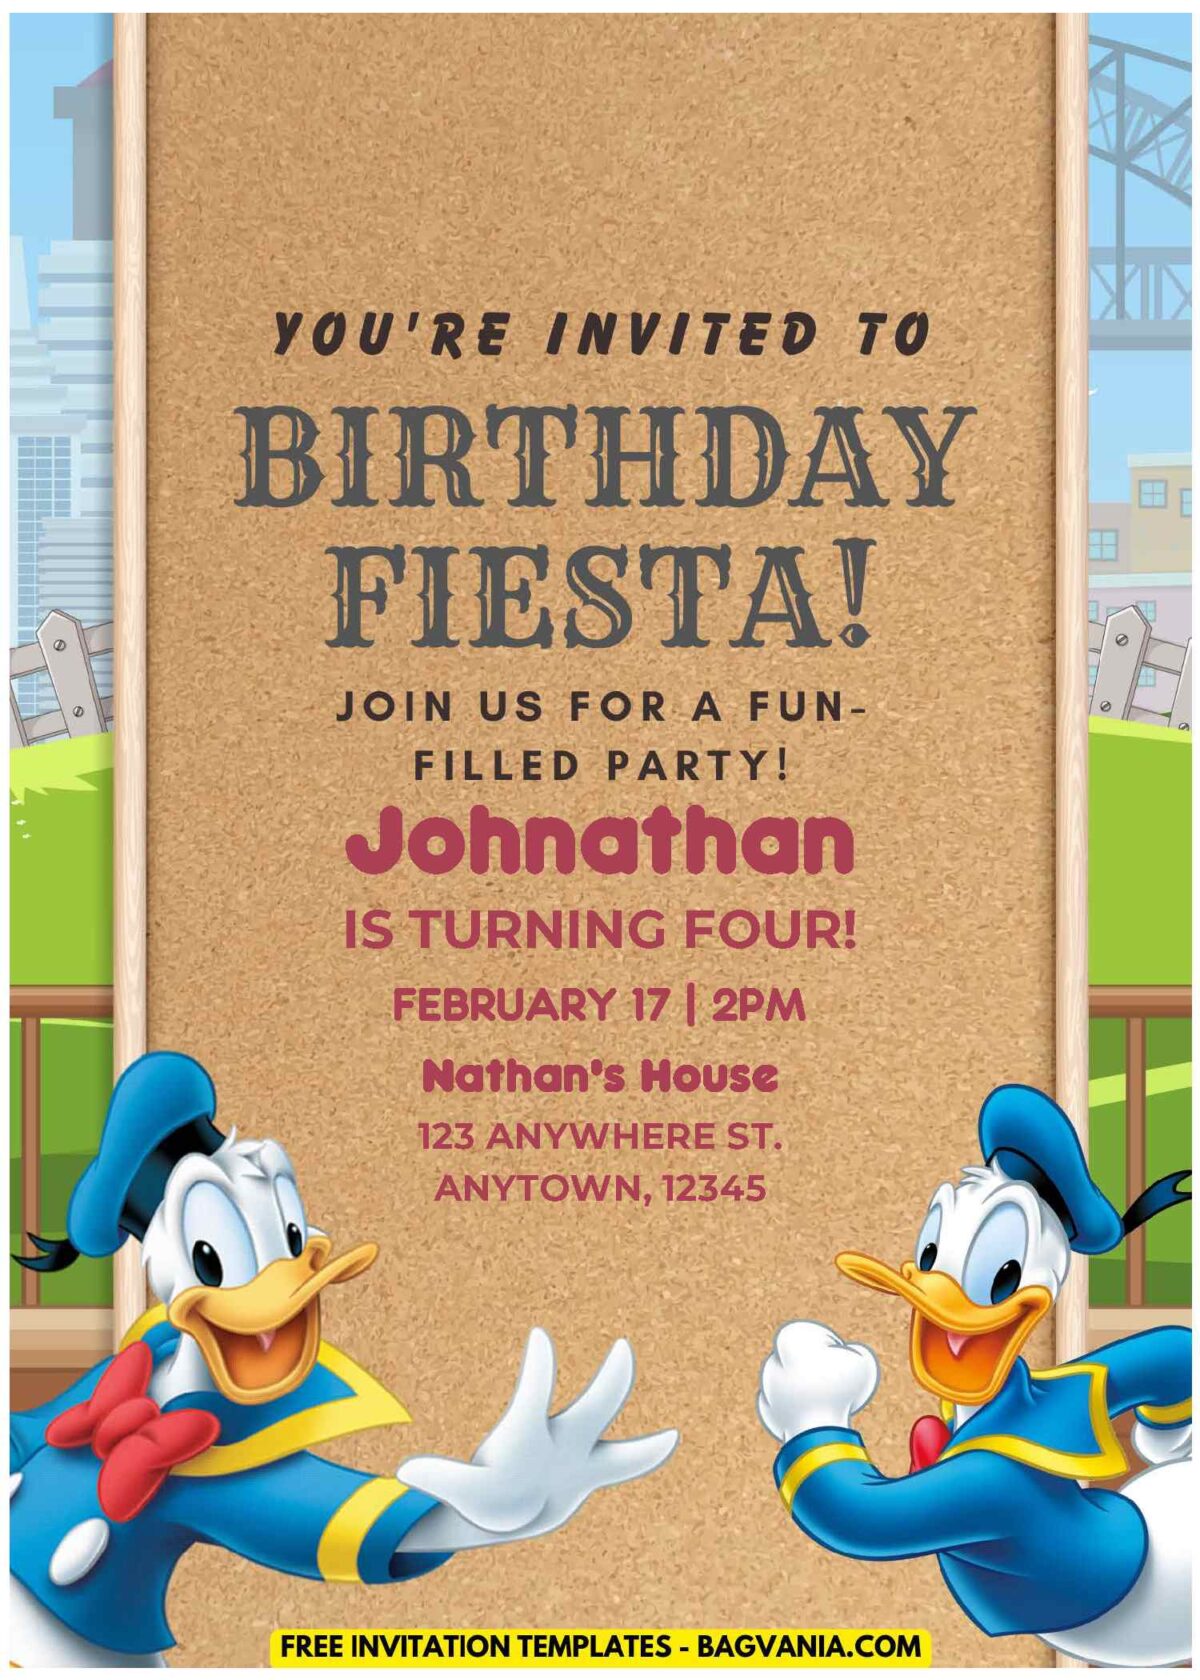 (Free Editable PDF) Classic Donald Duck Birthday Invitation Templates J